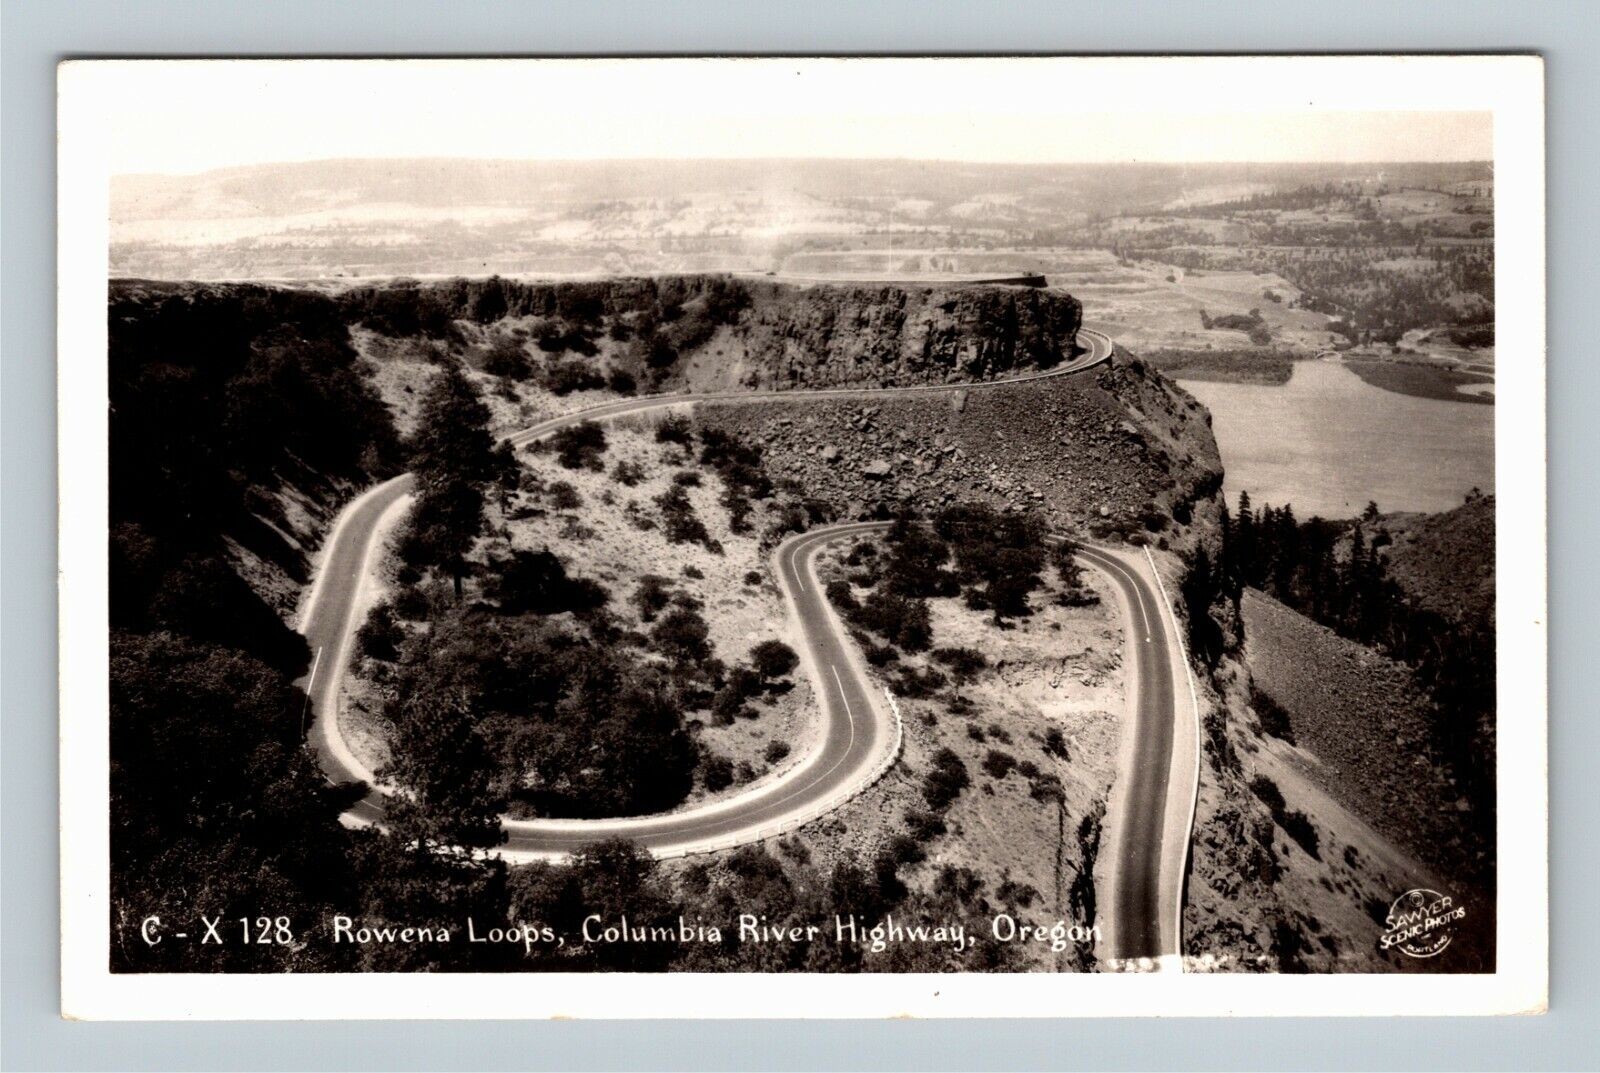 RPPC Columbia River Highway OR, Rowena Loops, Oregon Real Photo Vintage Postcard